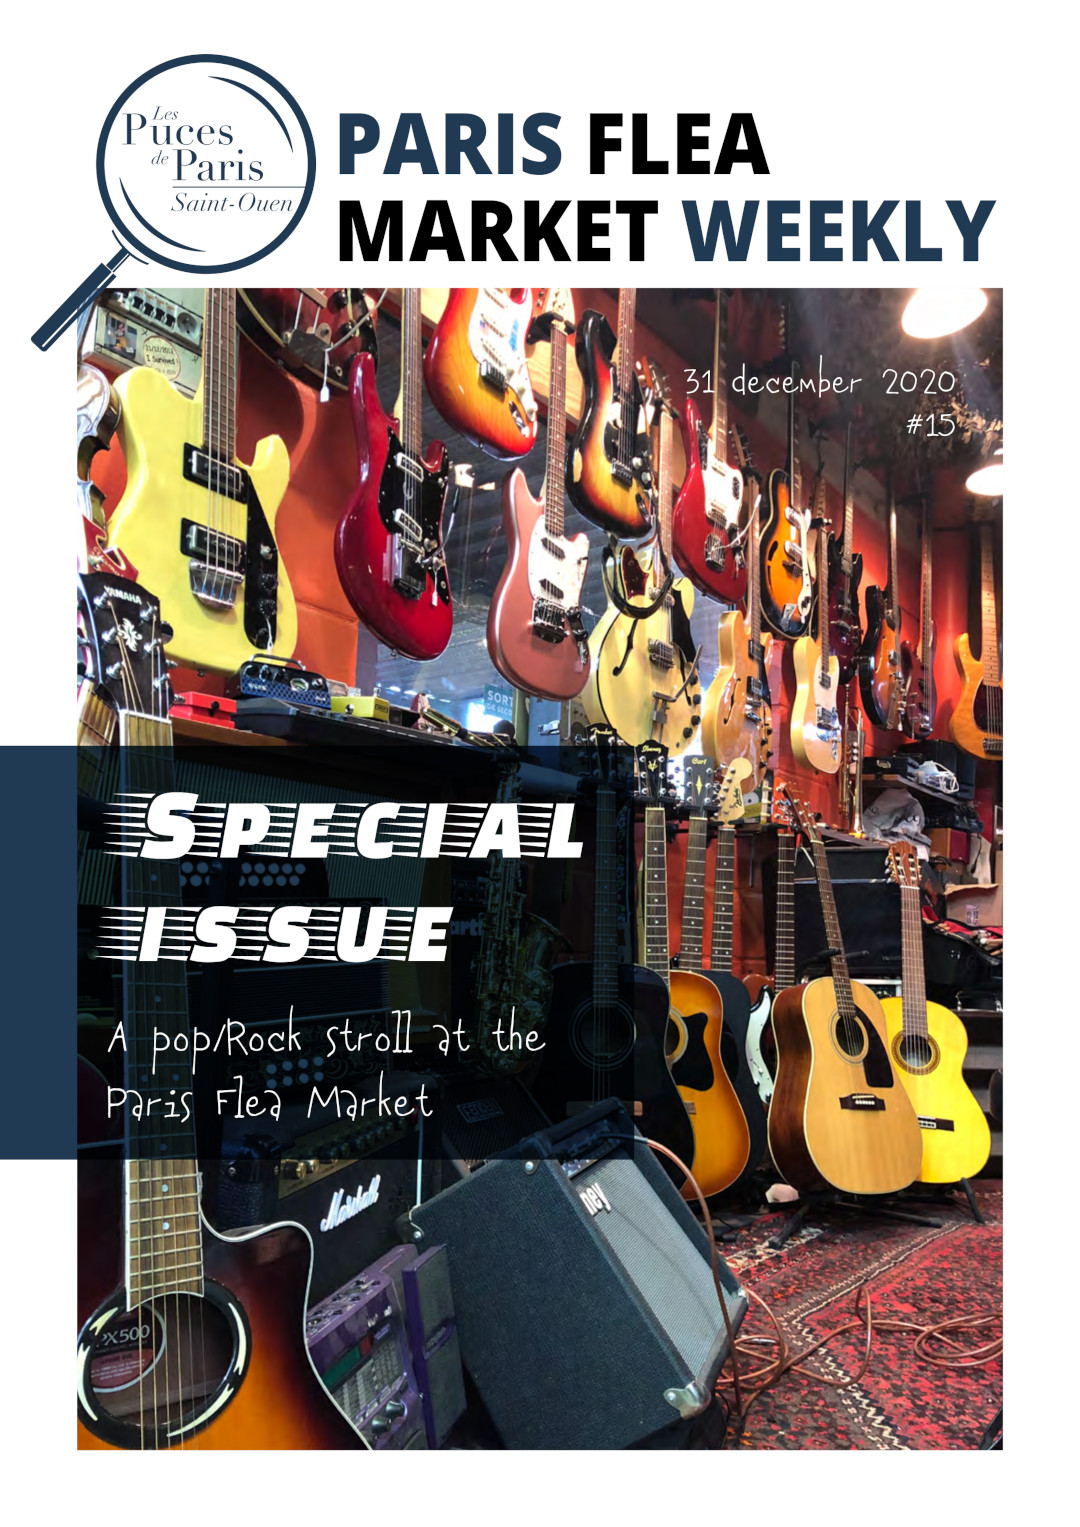 Cover of the Paris Flea Market Weekly dedicated to pop/rock culture